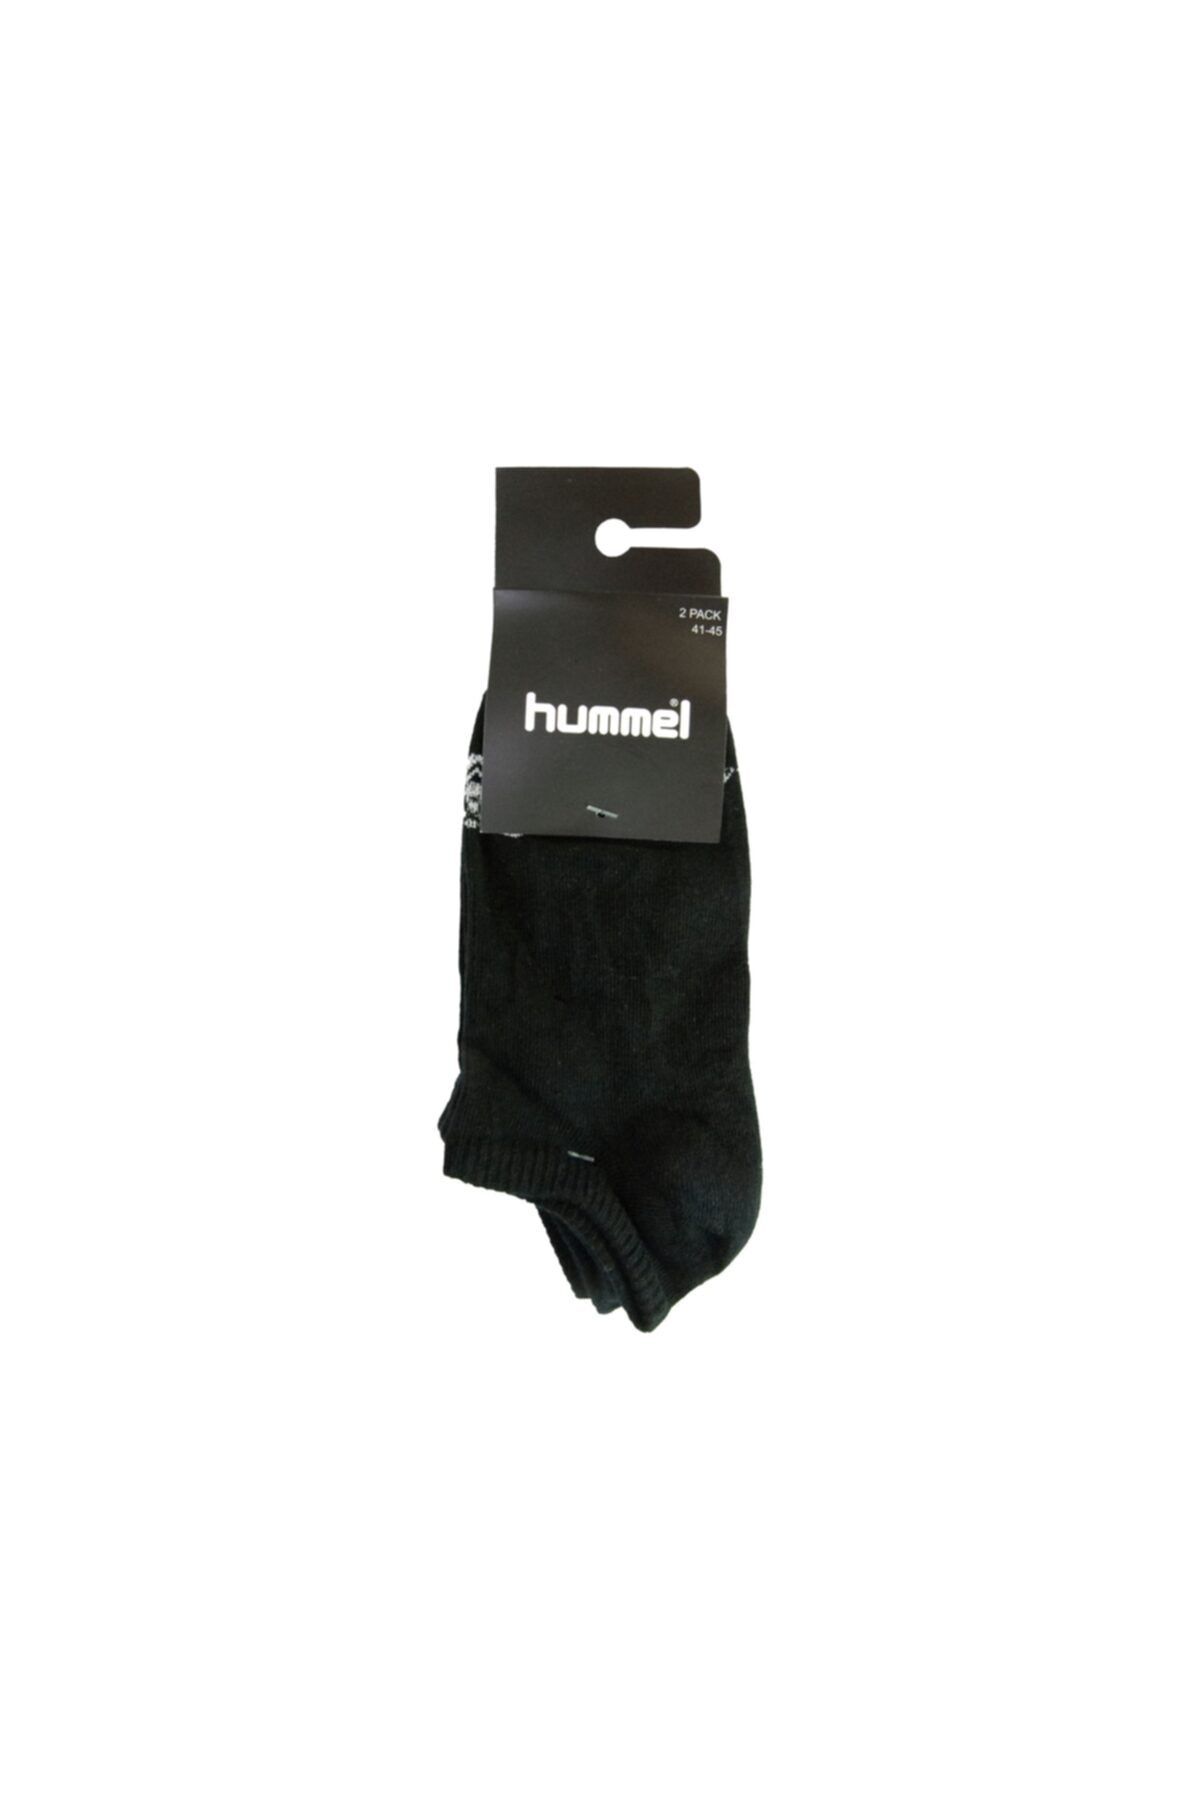 hummel Unisex Siyah Mini Çorap 2pk 970155-2001